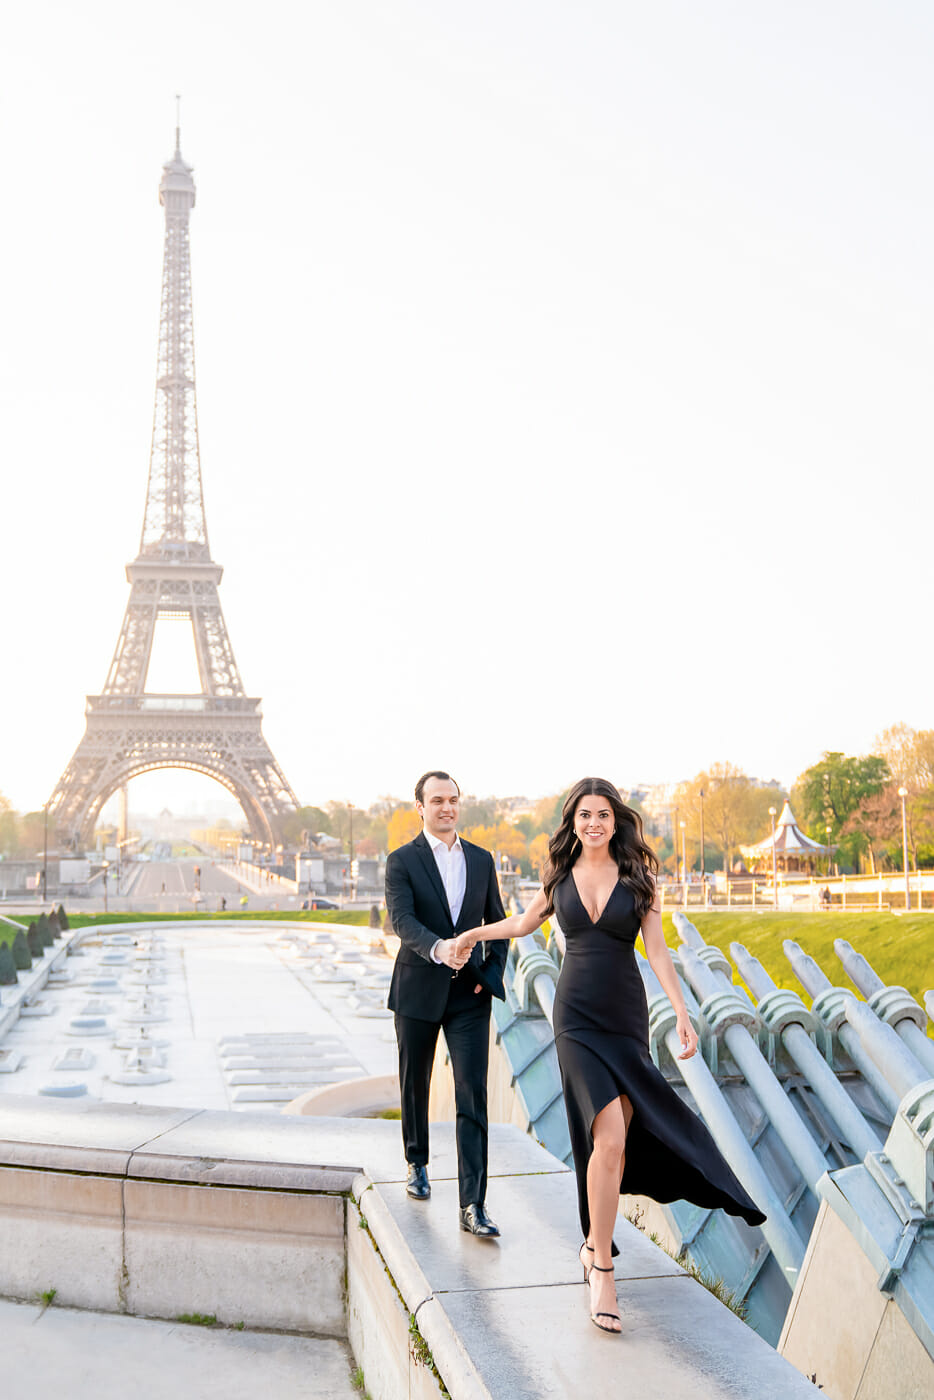 Hot Eiffel Tower couple photos taken at Trocadero at sunrise